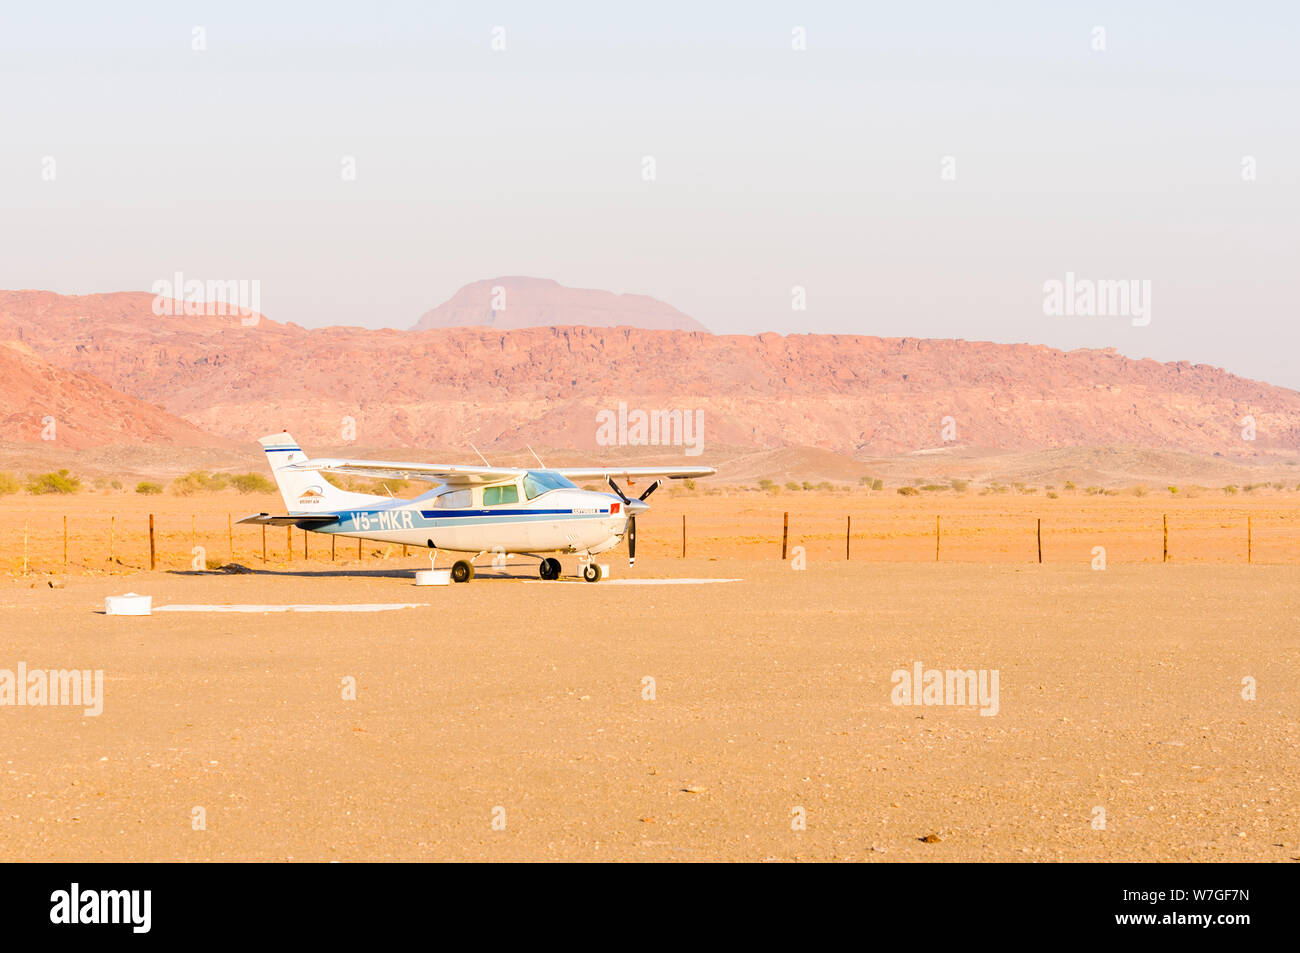 Cessna 210N Centurion II V5-PMM operated by Desert Air, Namutoni Airport, Etosha National Park, Namibia Stock Photo